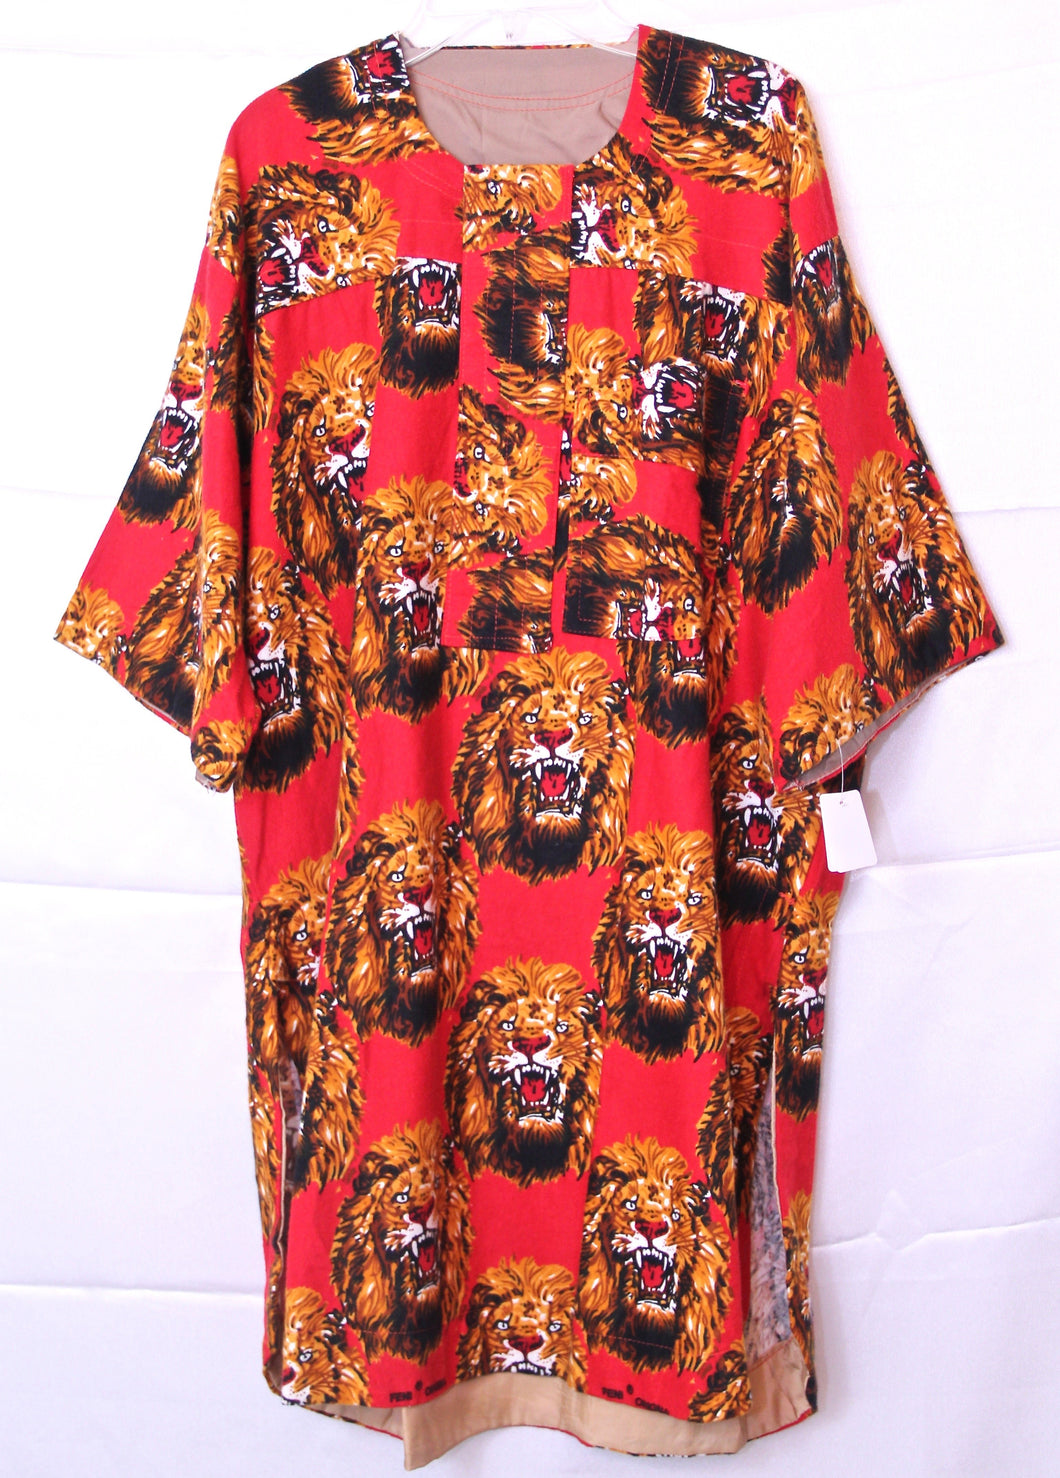 Isiagu Men's Chieftaincy Outfits, CTHM80010